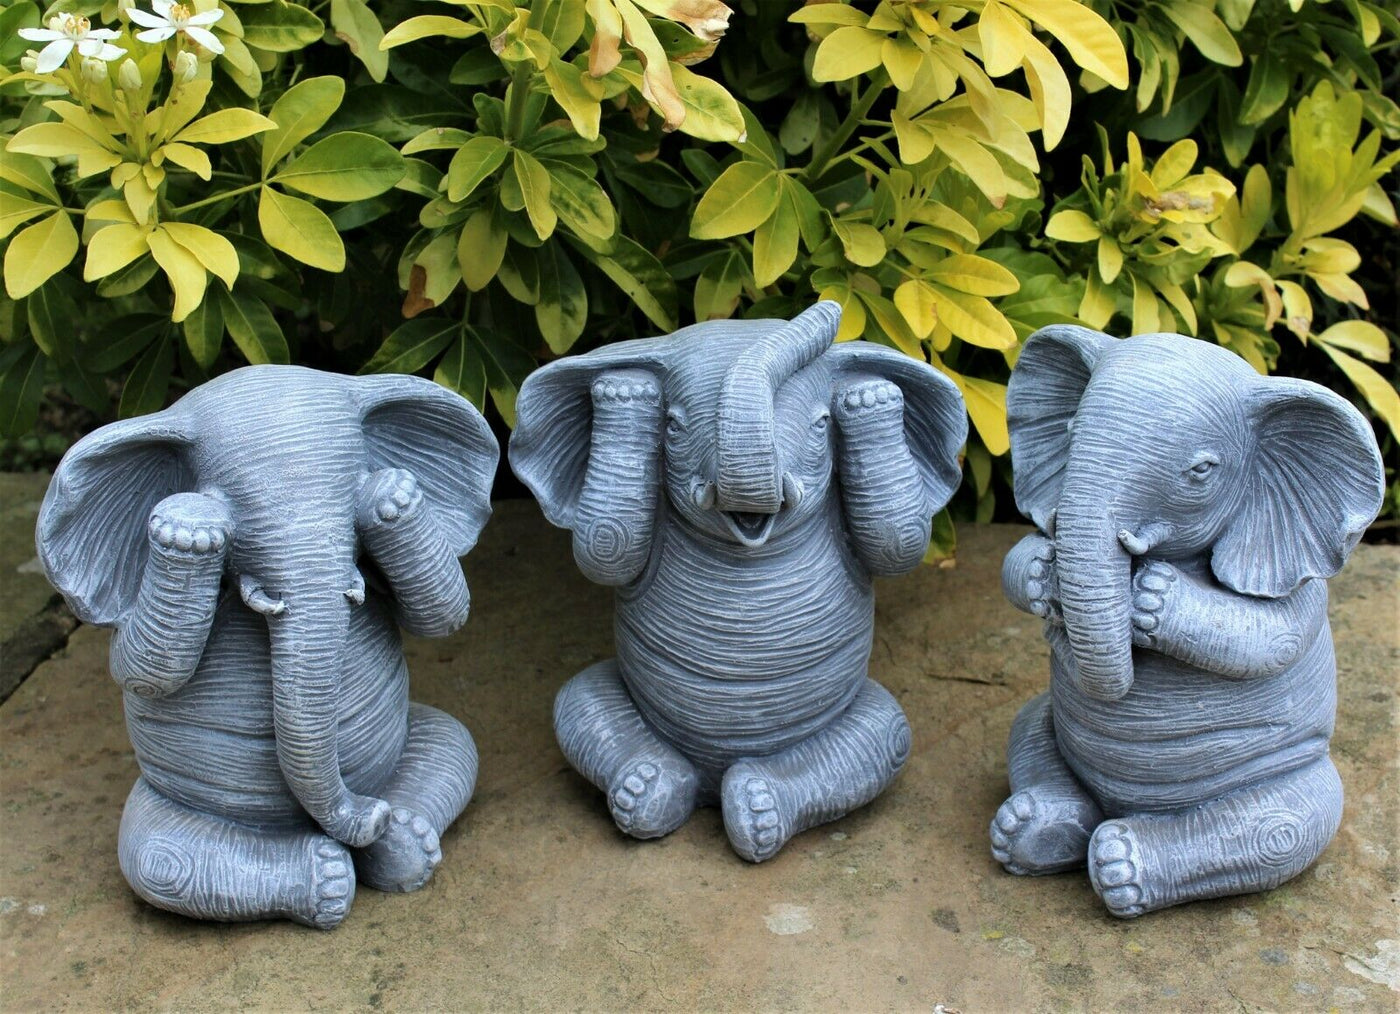 3 Wise Elephant Ornaments - See no Evil, Speak no Evil, Hear no